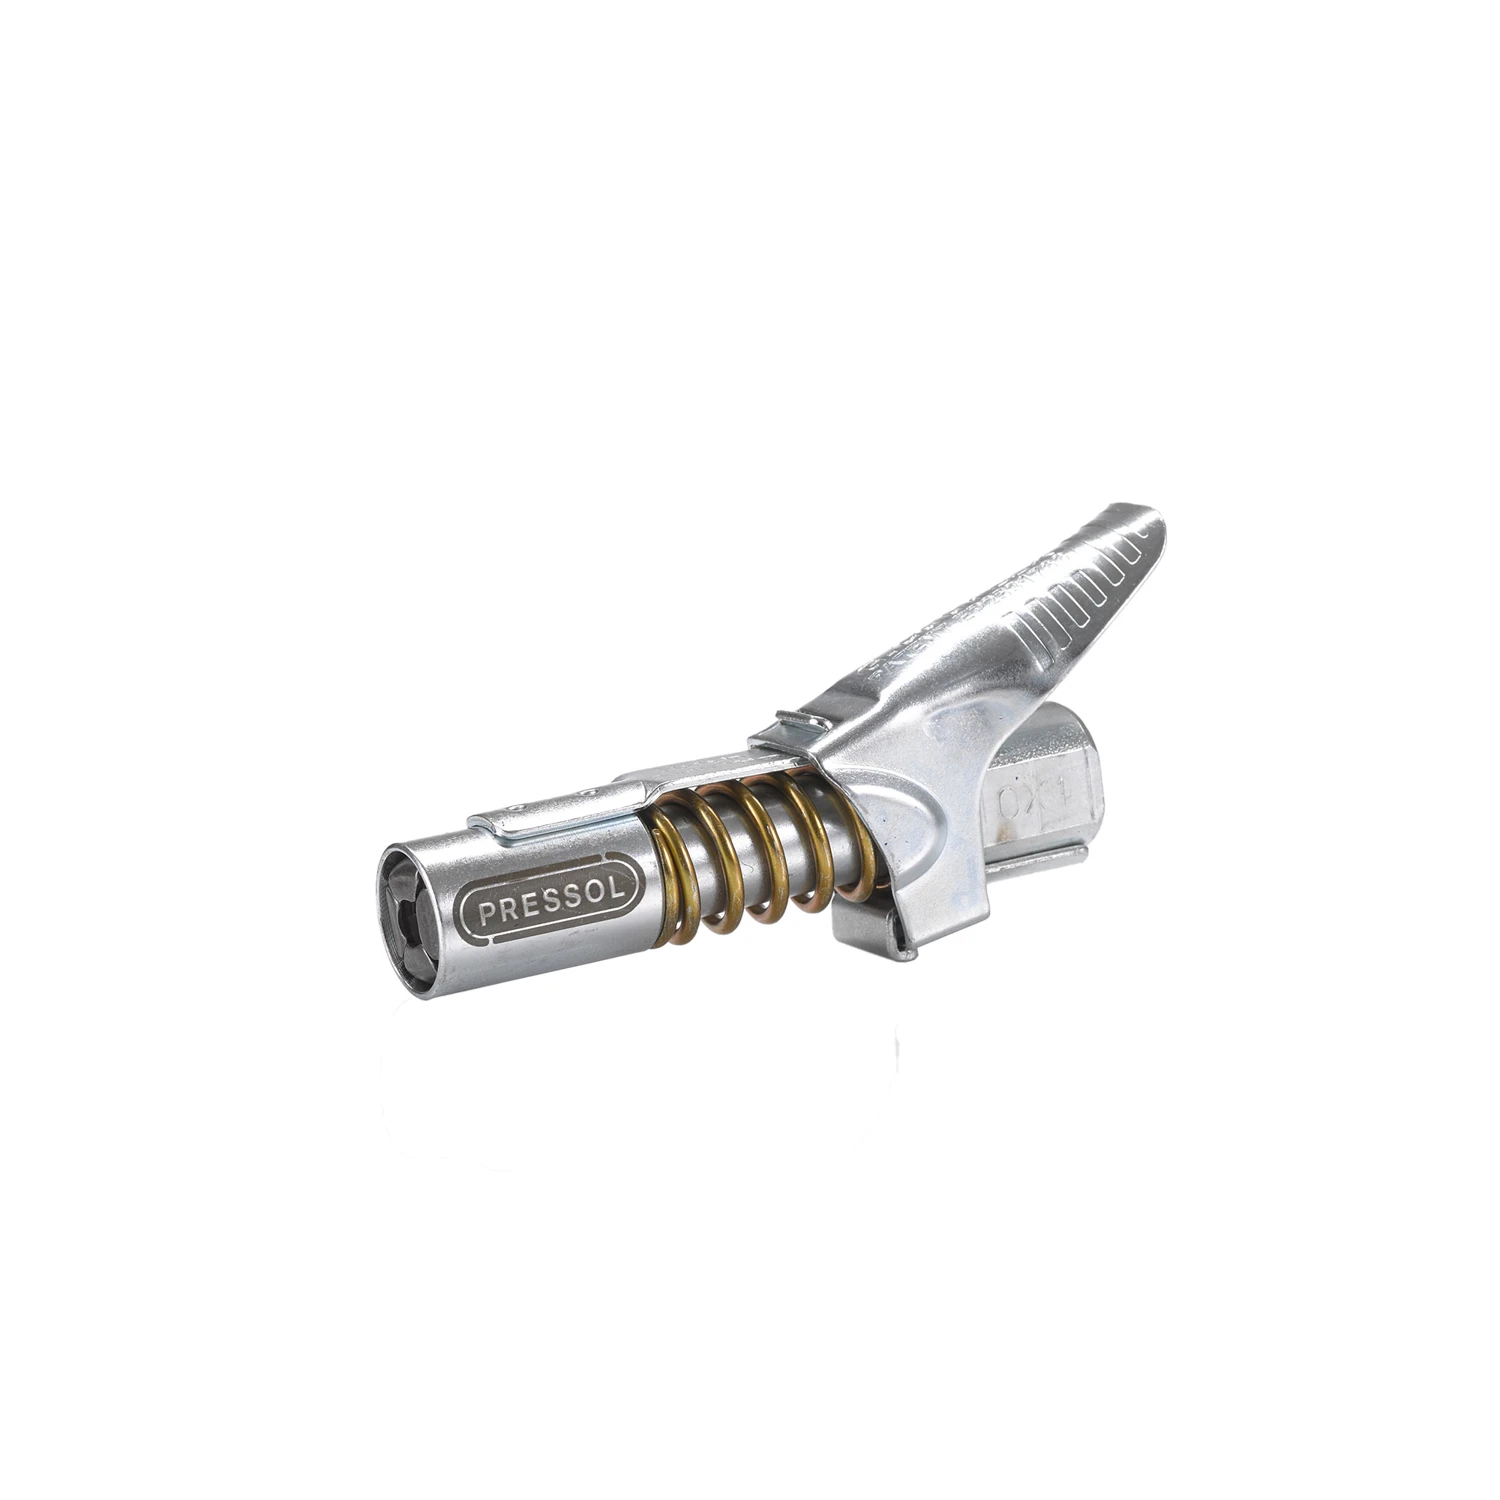 Pressol KLEM hydraulic nozzle 4-jaw G 1/8 type G-coupler